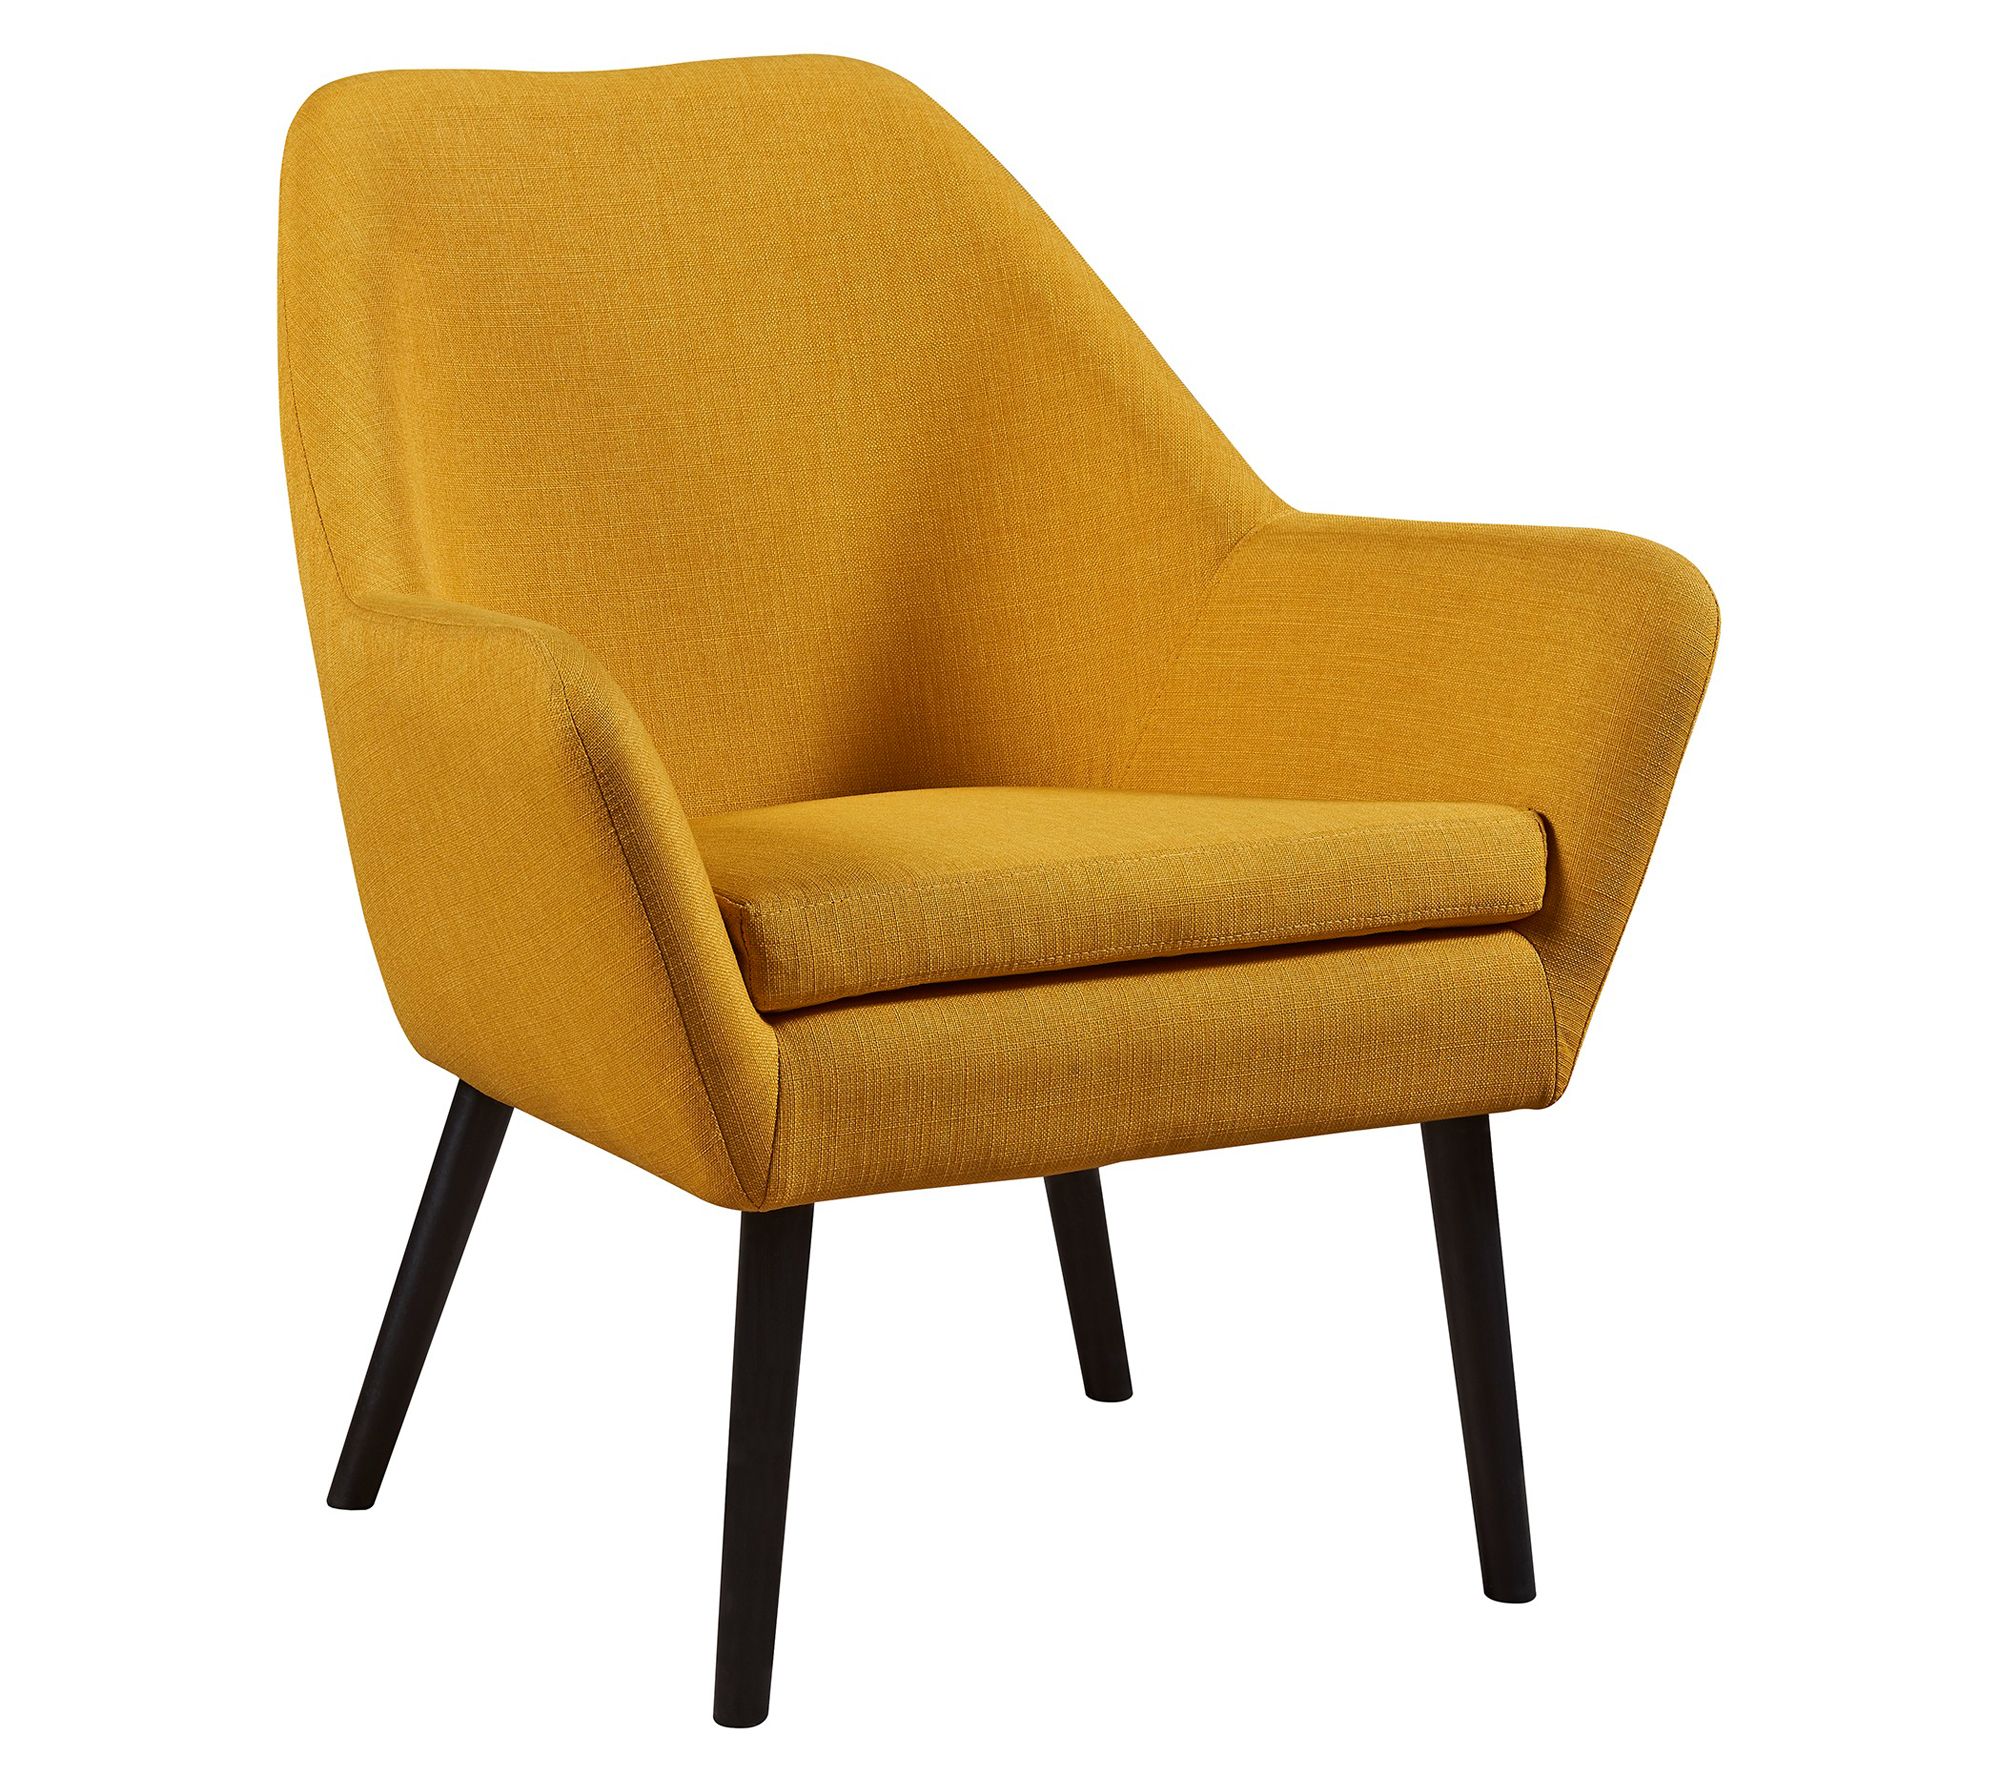 Горчичное кресло. Кресло Риль Velvet Mustard. Кресло Velvet Ardmore Chair Yellow. Кресло cosy Yellow 9400. Кресло горчичного цвета.